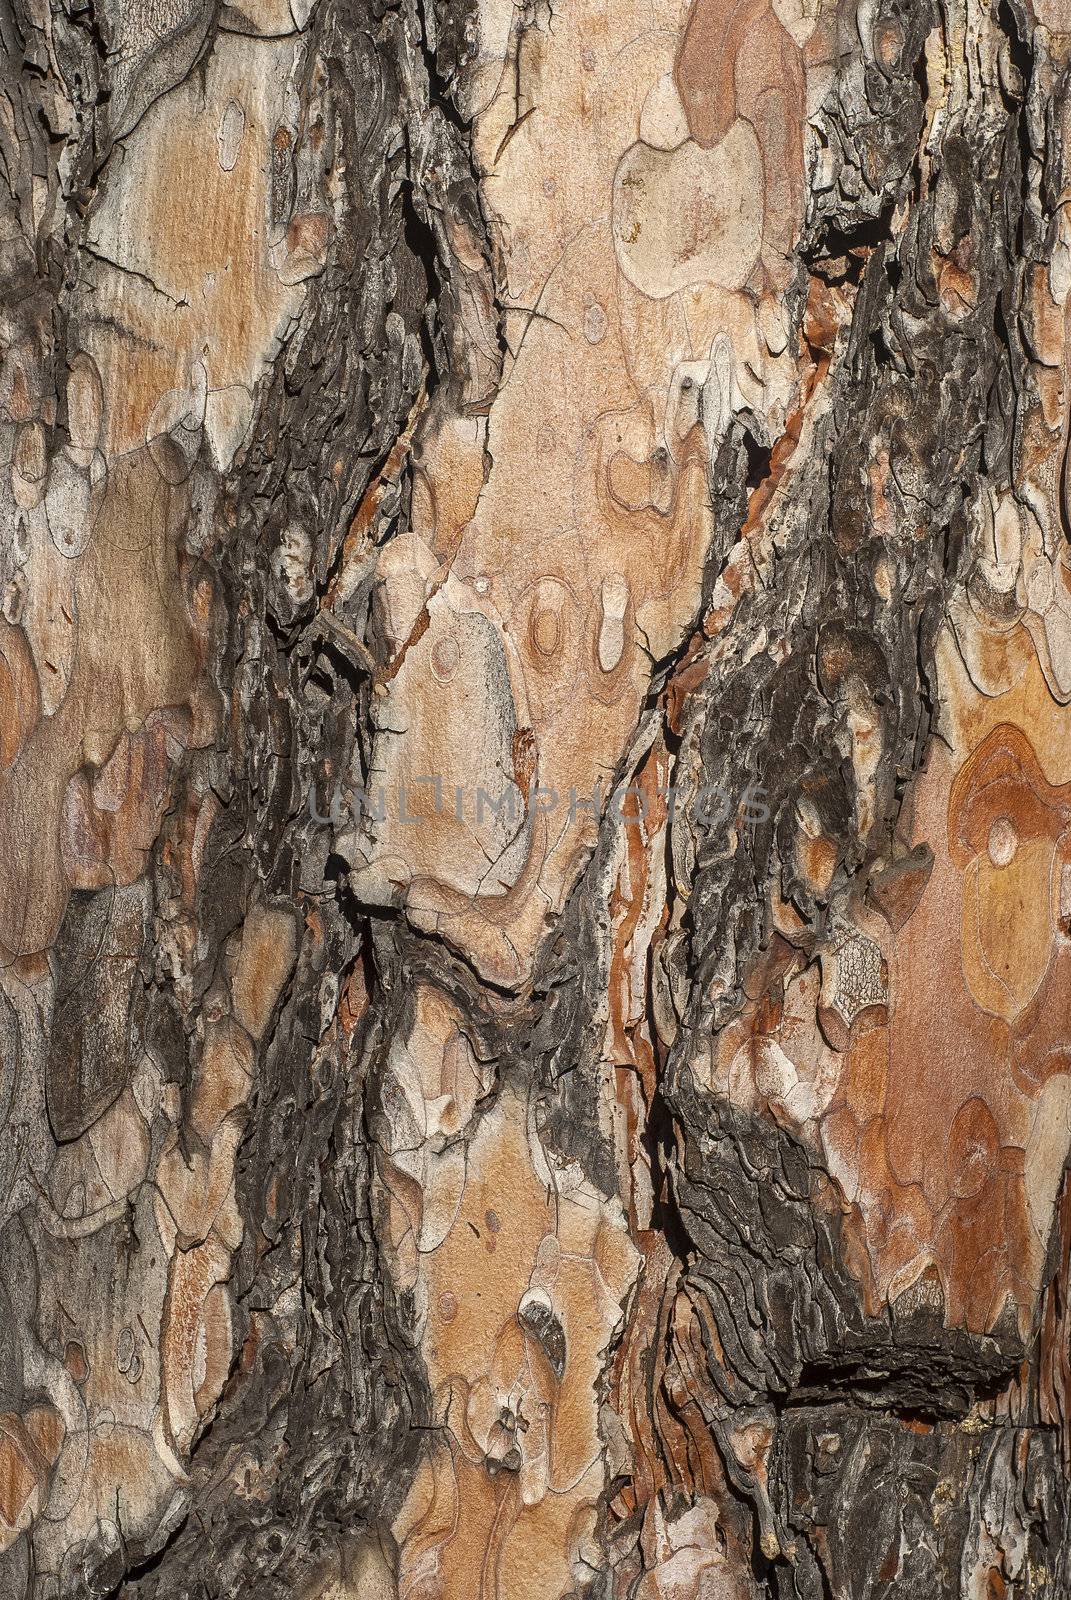 Spruce tree bark closeup by varbenov